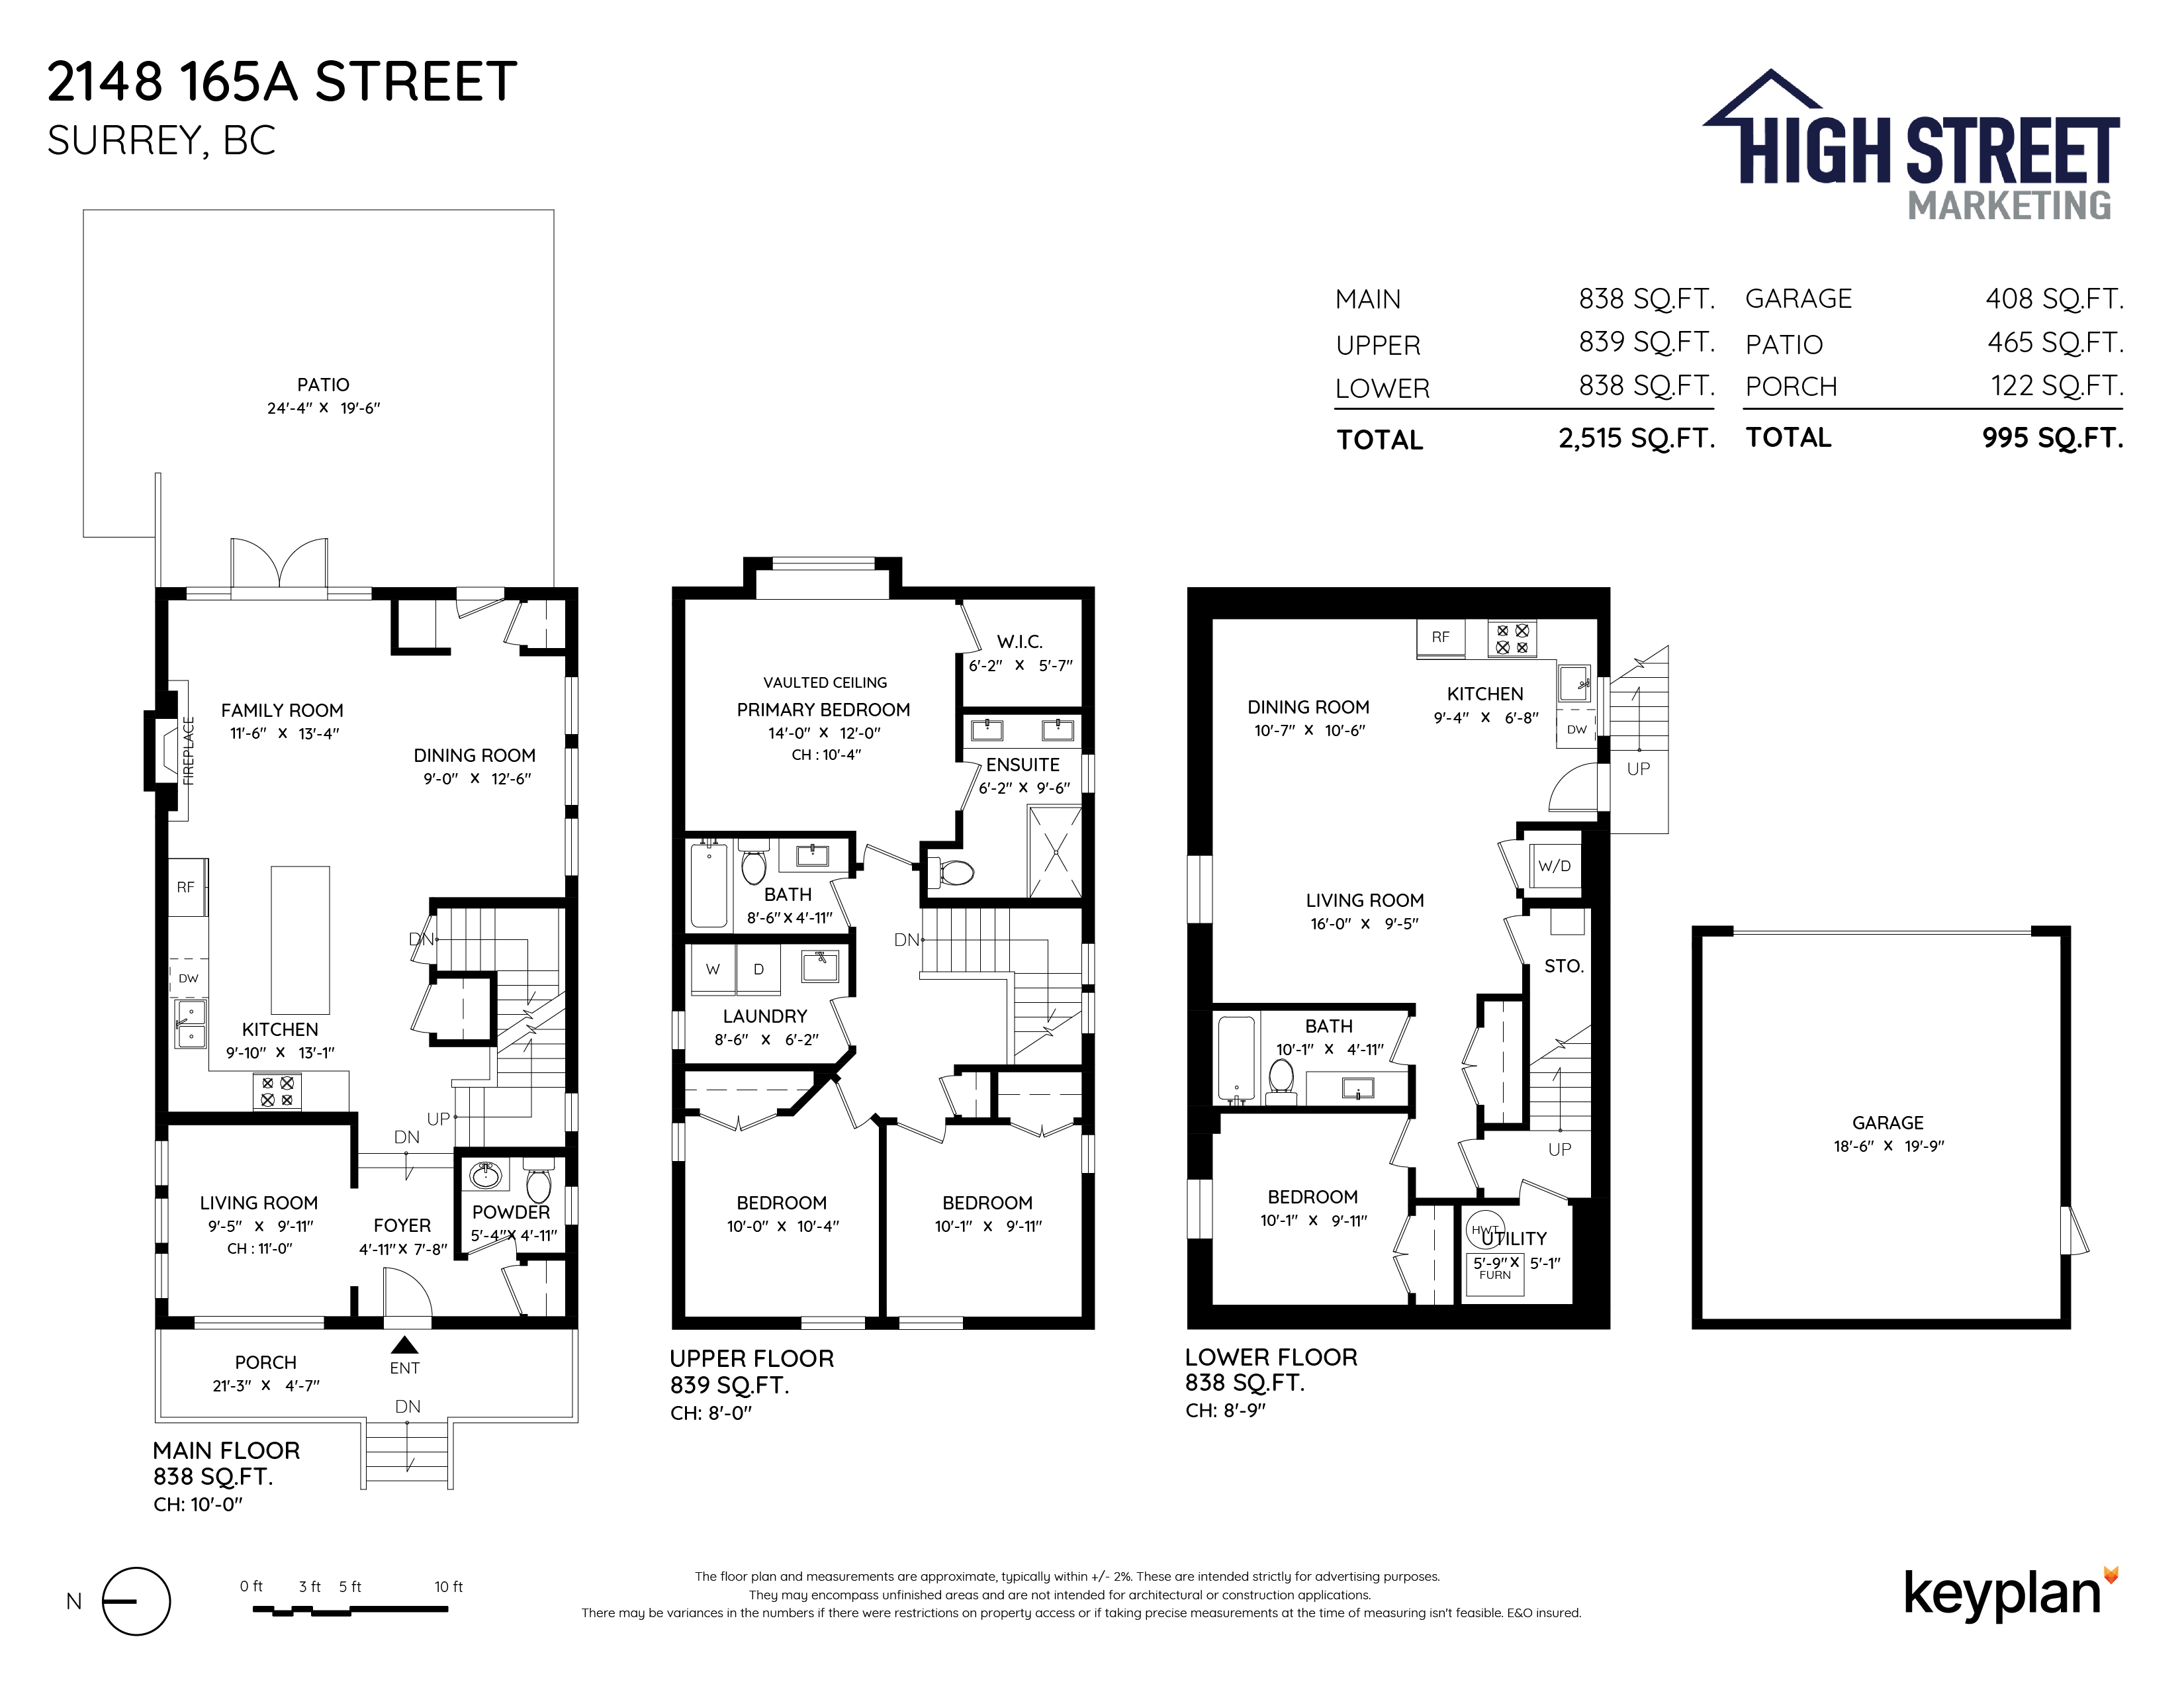 High Street Marketing - 2148 165A Street, Surrey, BC, Canada | Floor Plan 1